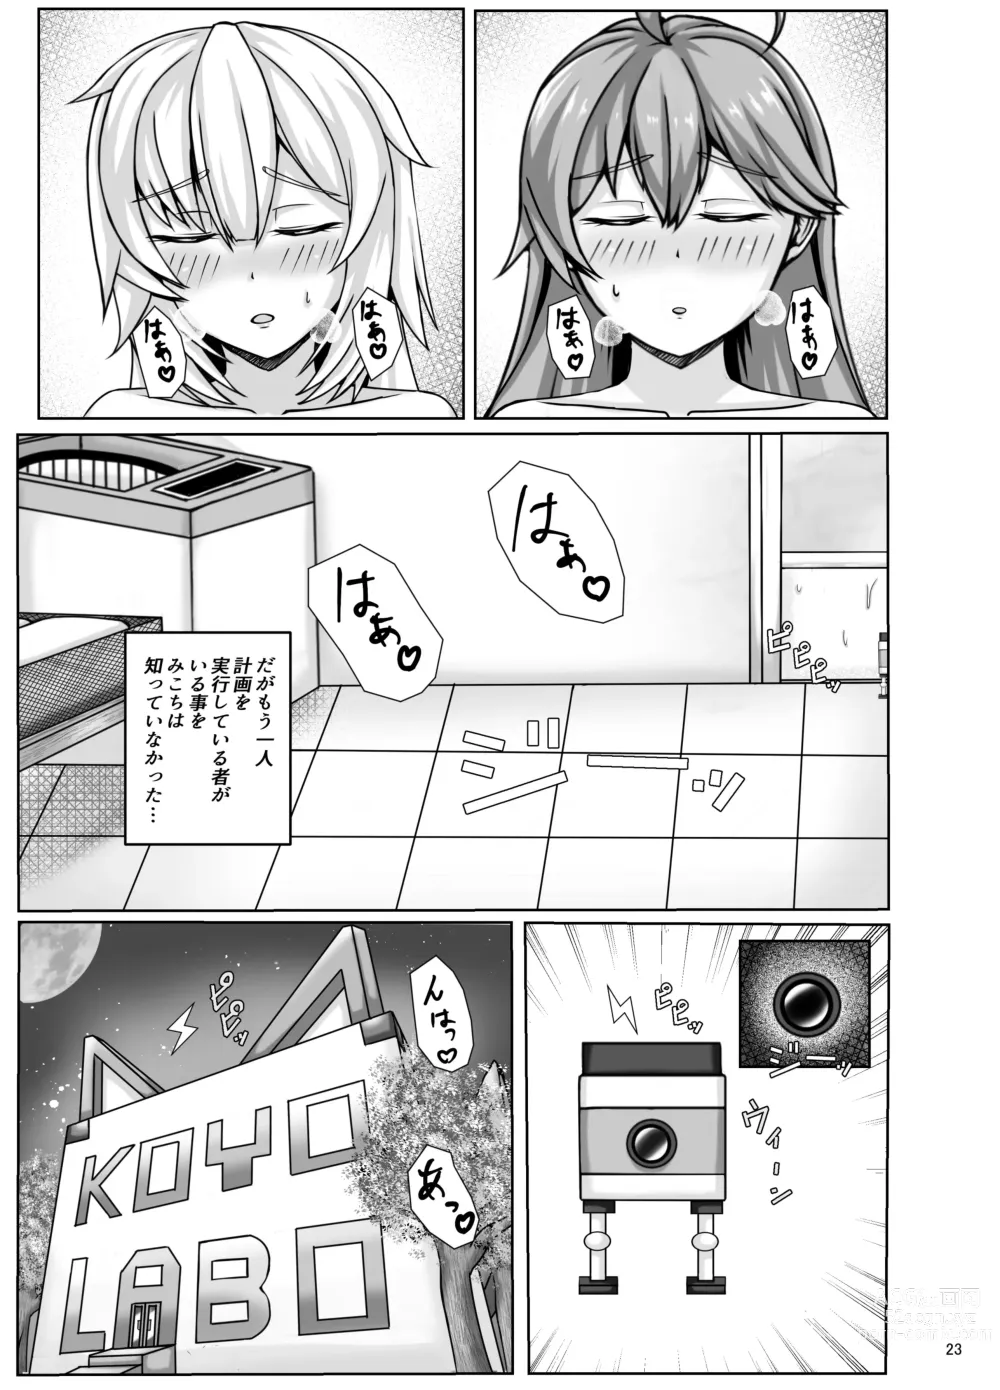 Page 23 of doujinshi Mikochi wa Shittenai